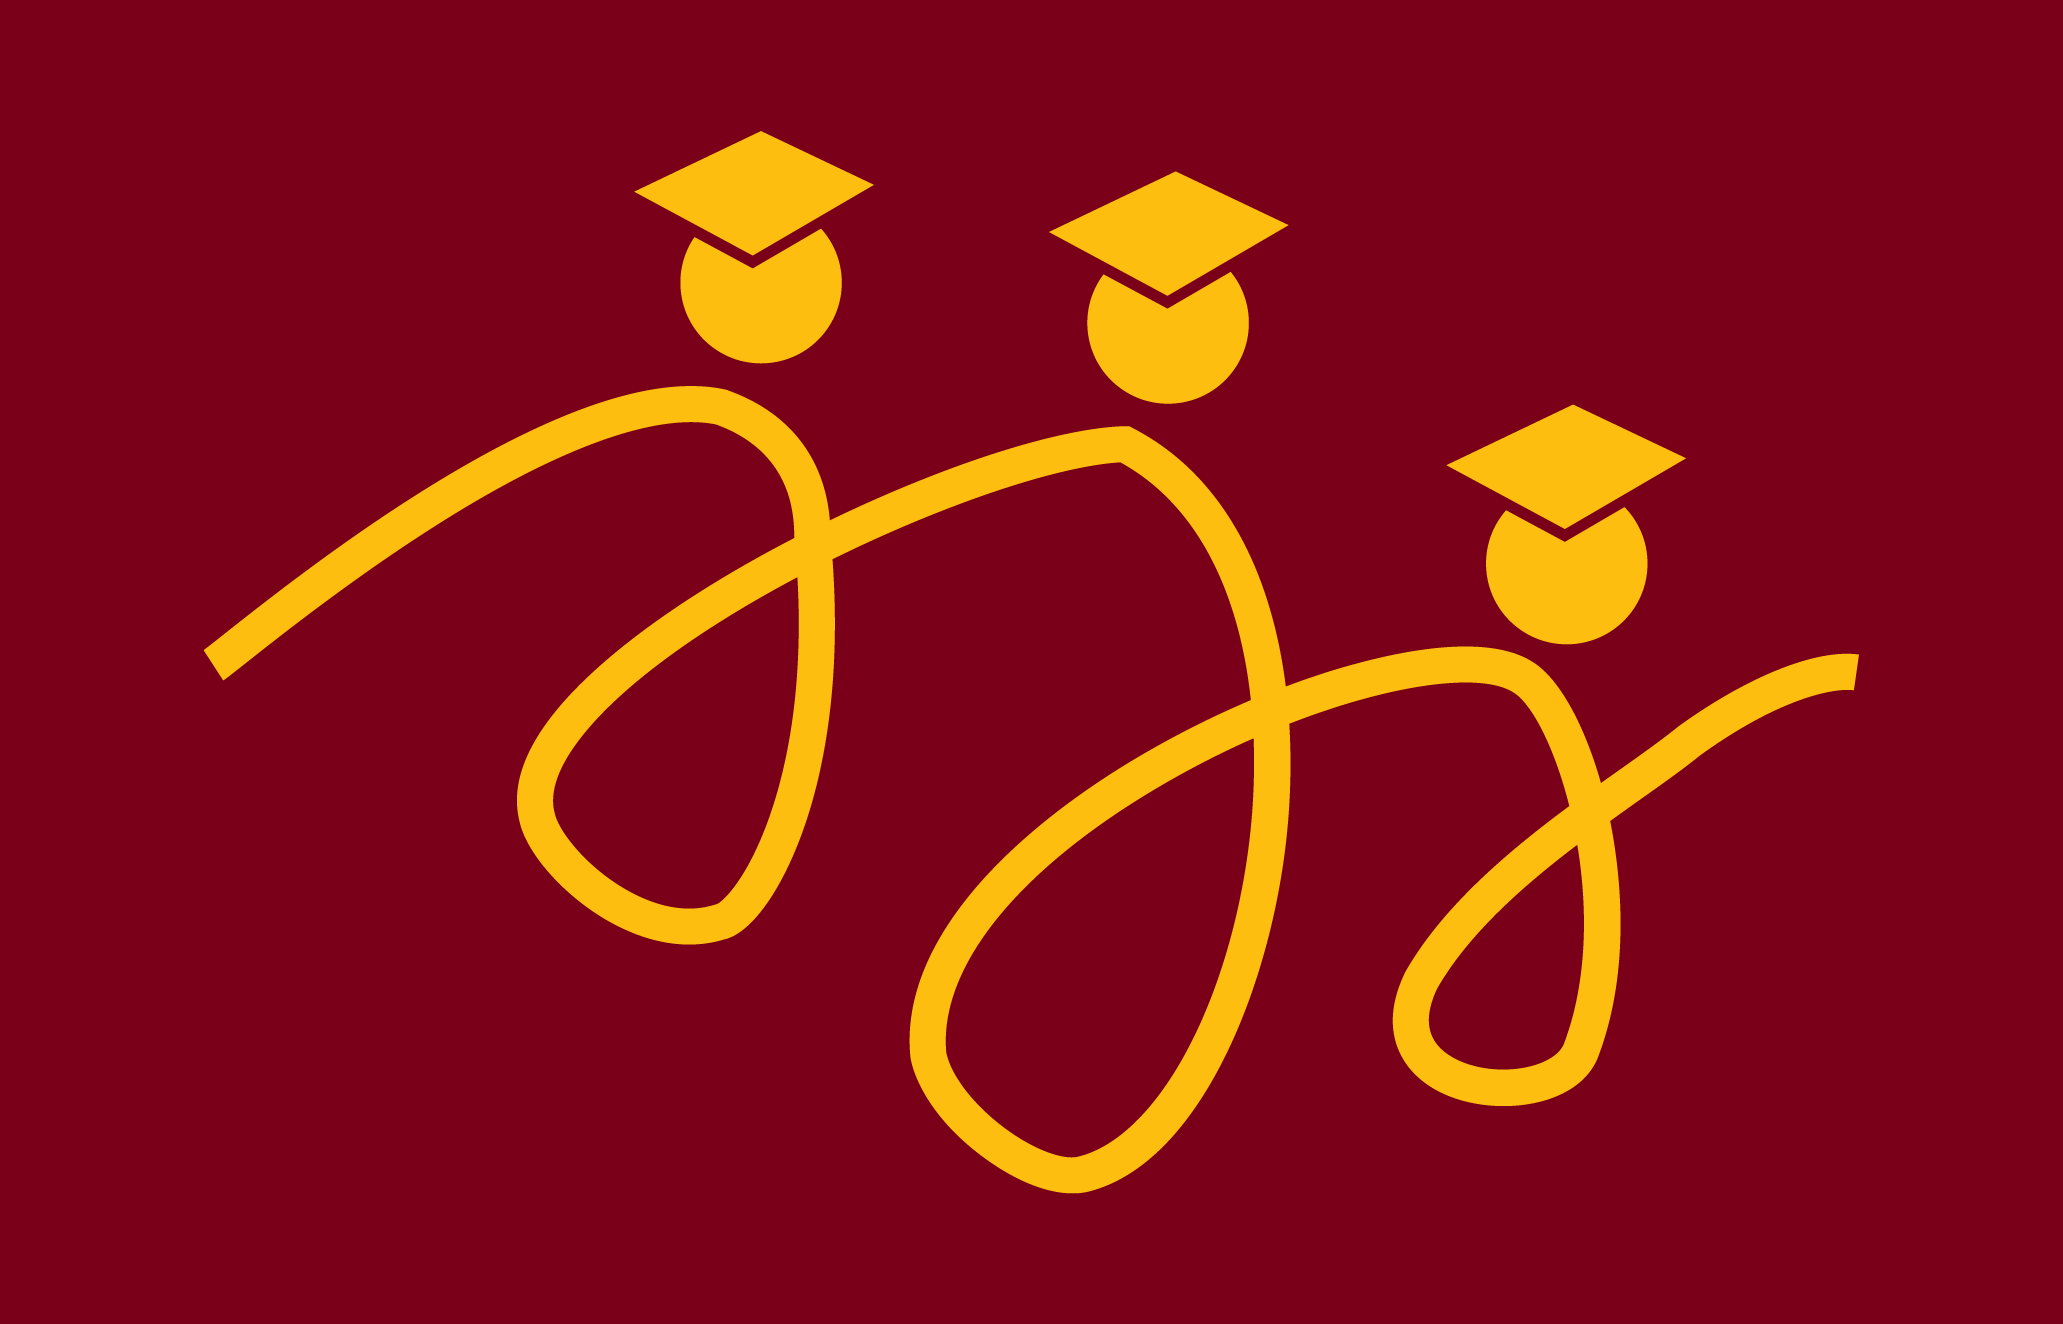 cesp logo bouncing lines with graduation caps